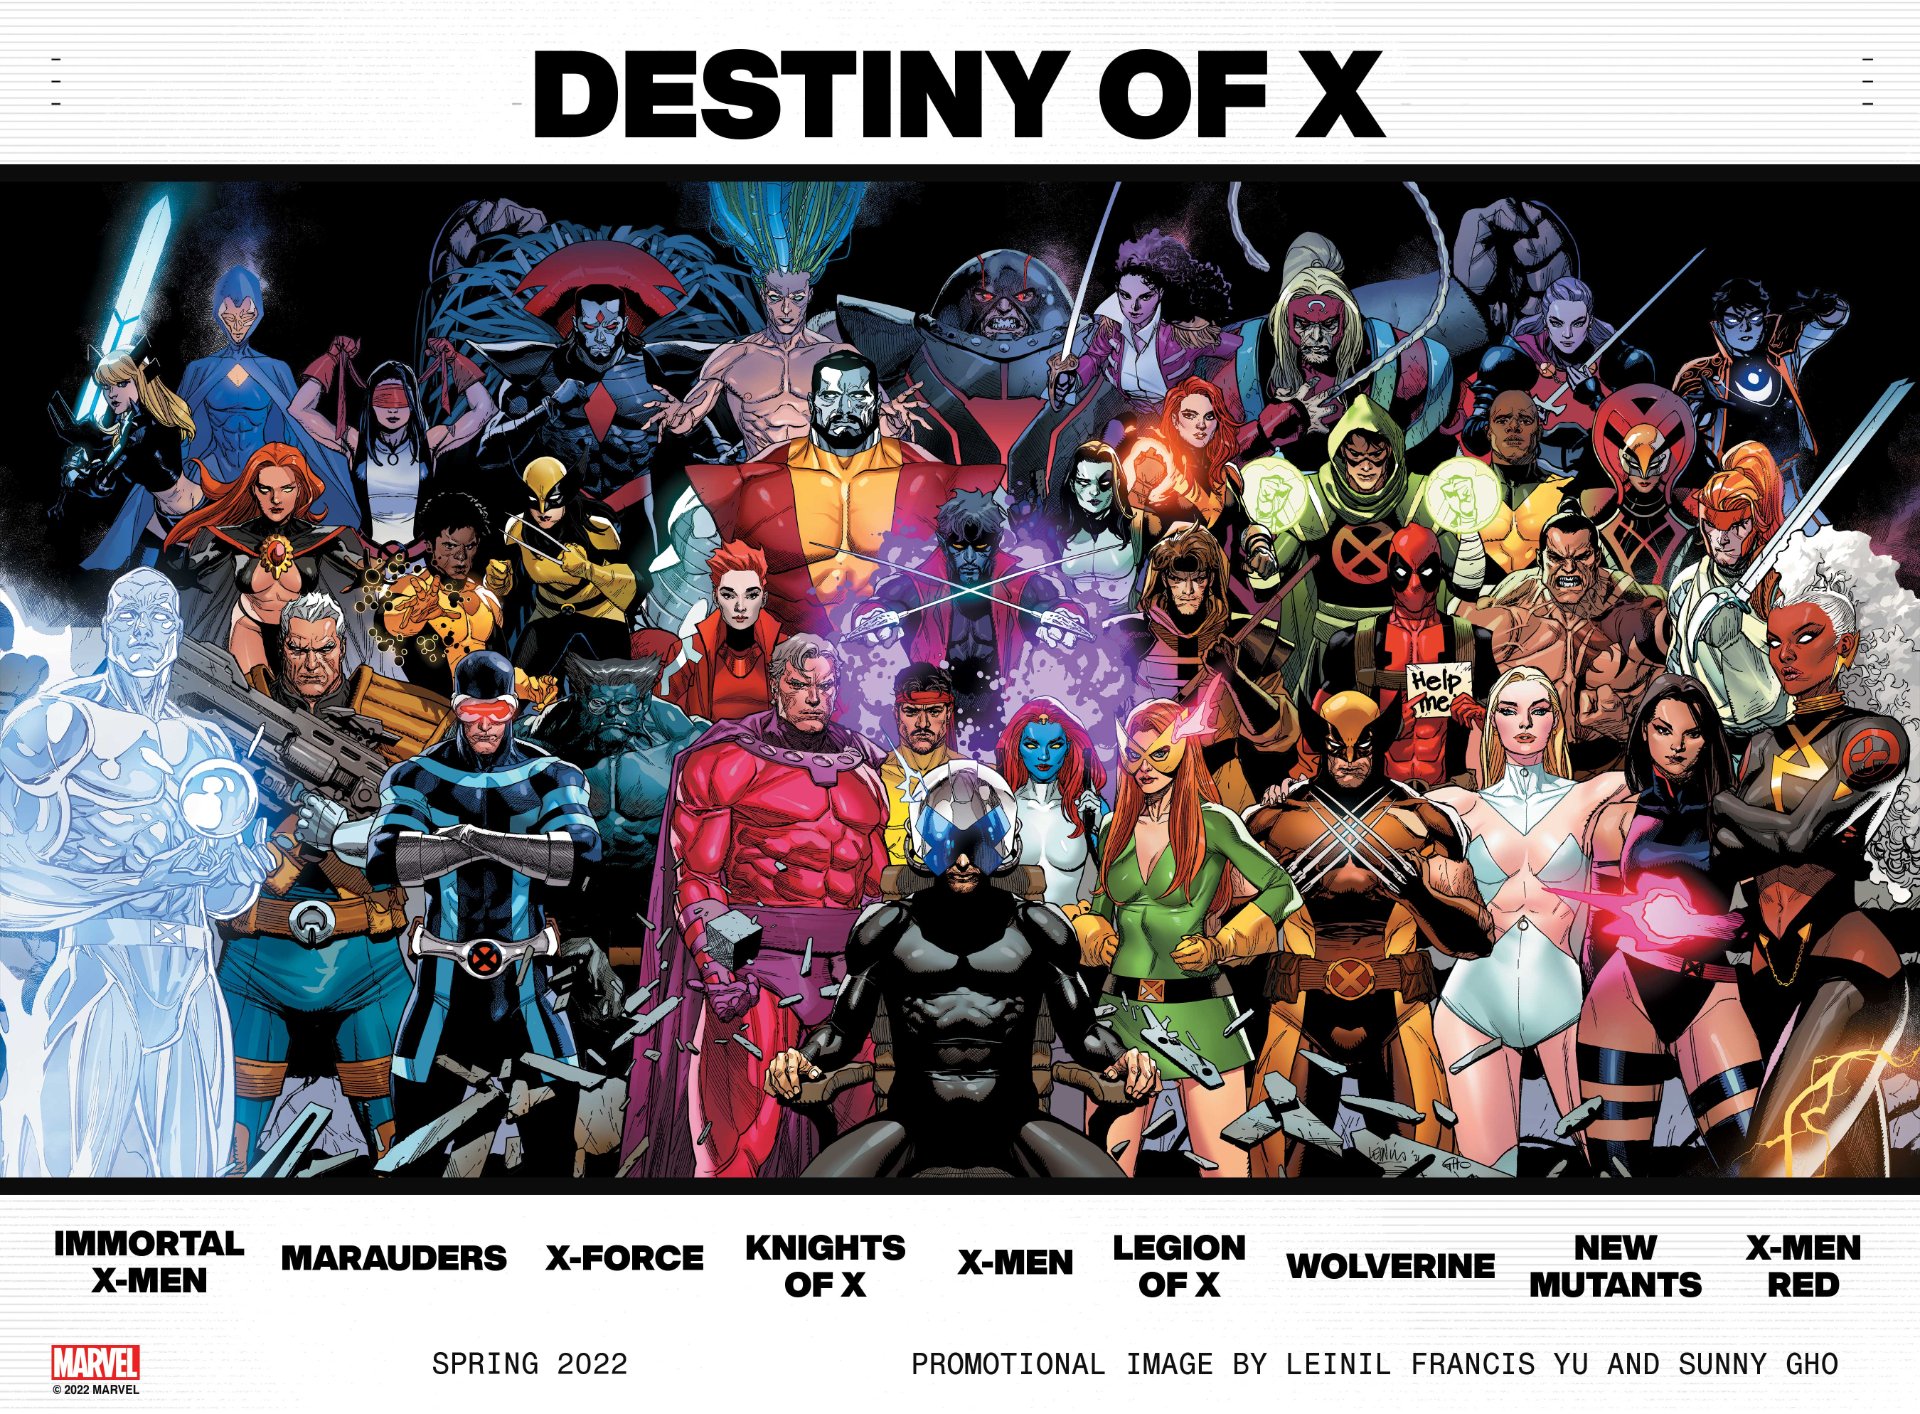 Brasileiro é confirmado como protagonista de novo 'X-Men' - AcheiUSA